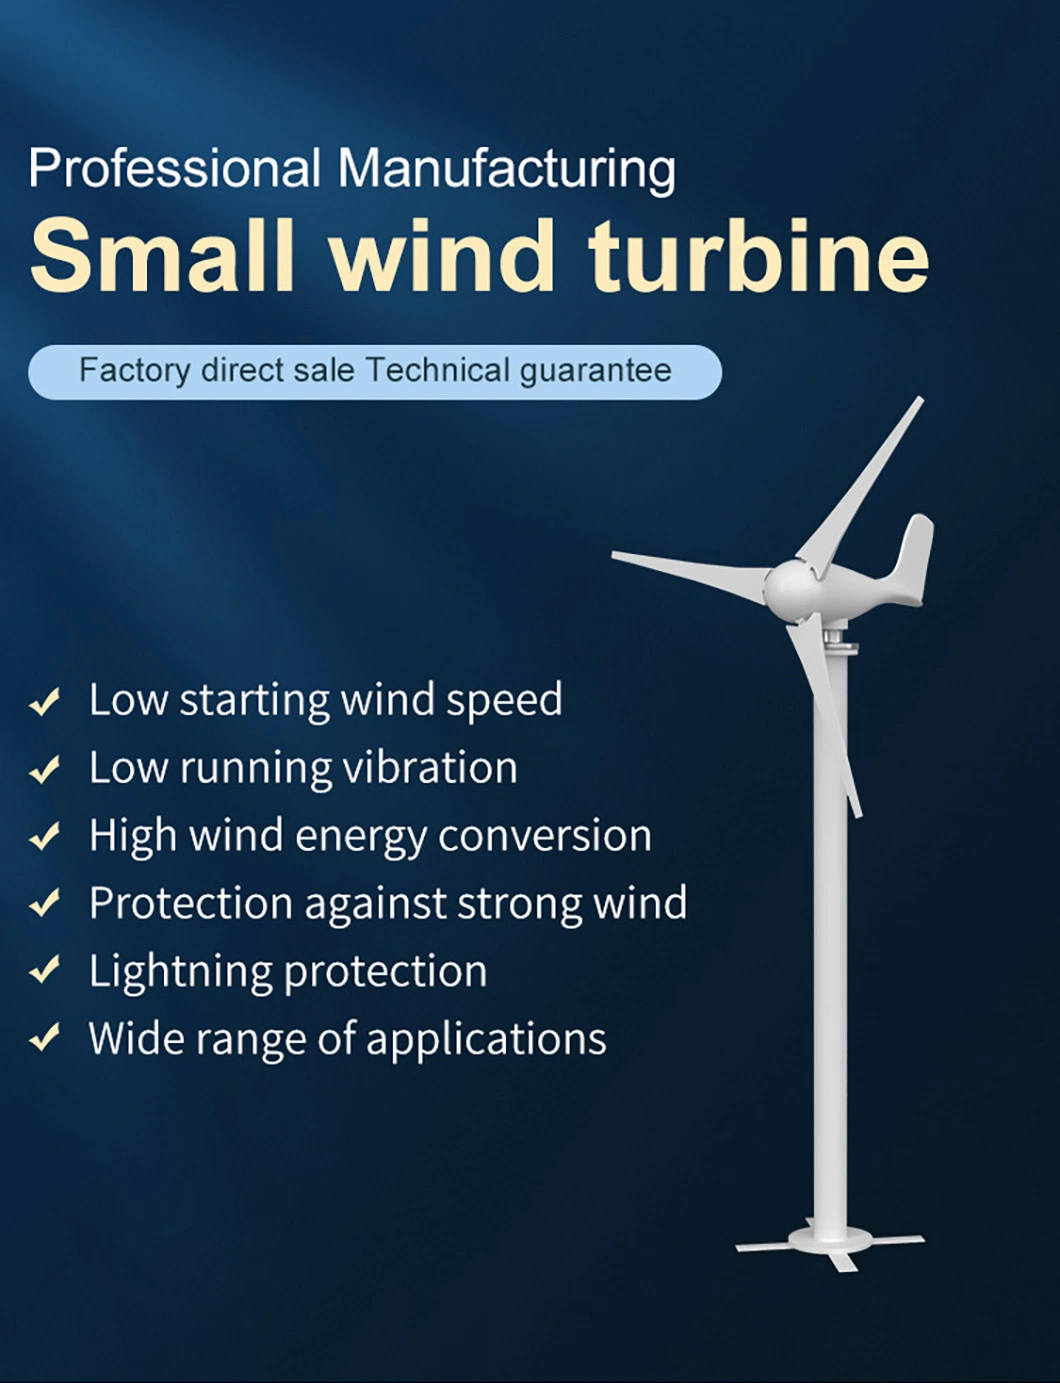 Top Sale Wind Turbine System Home Hybrid Wind and Solar Electric Systems 500W 1000W 1.5kw 2kw 3kw